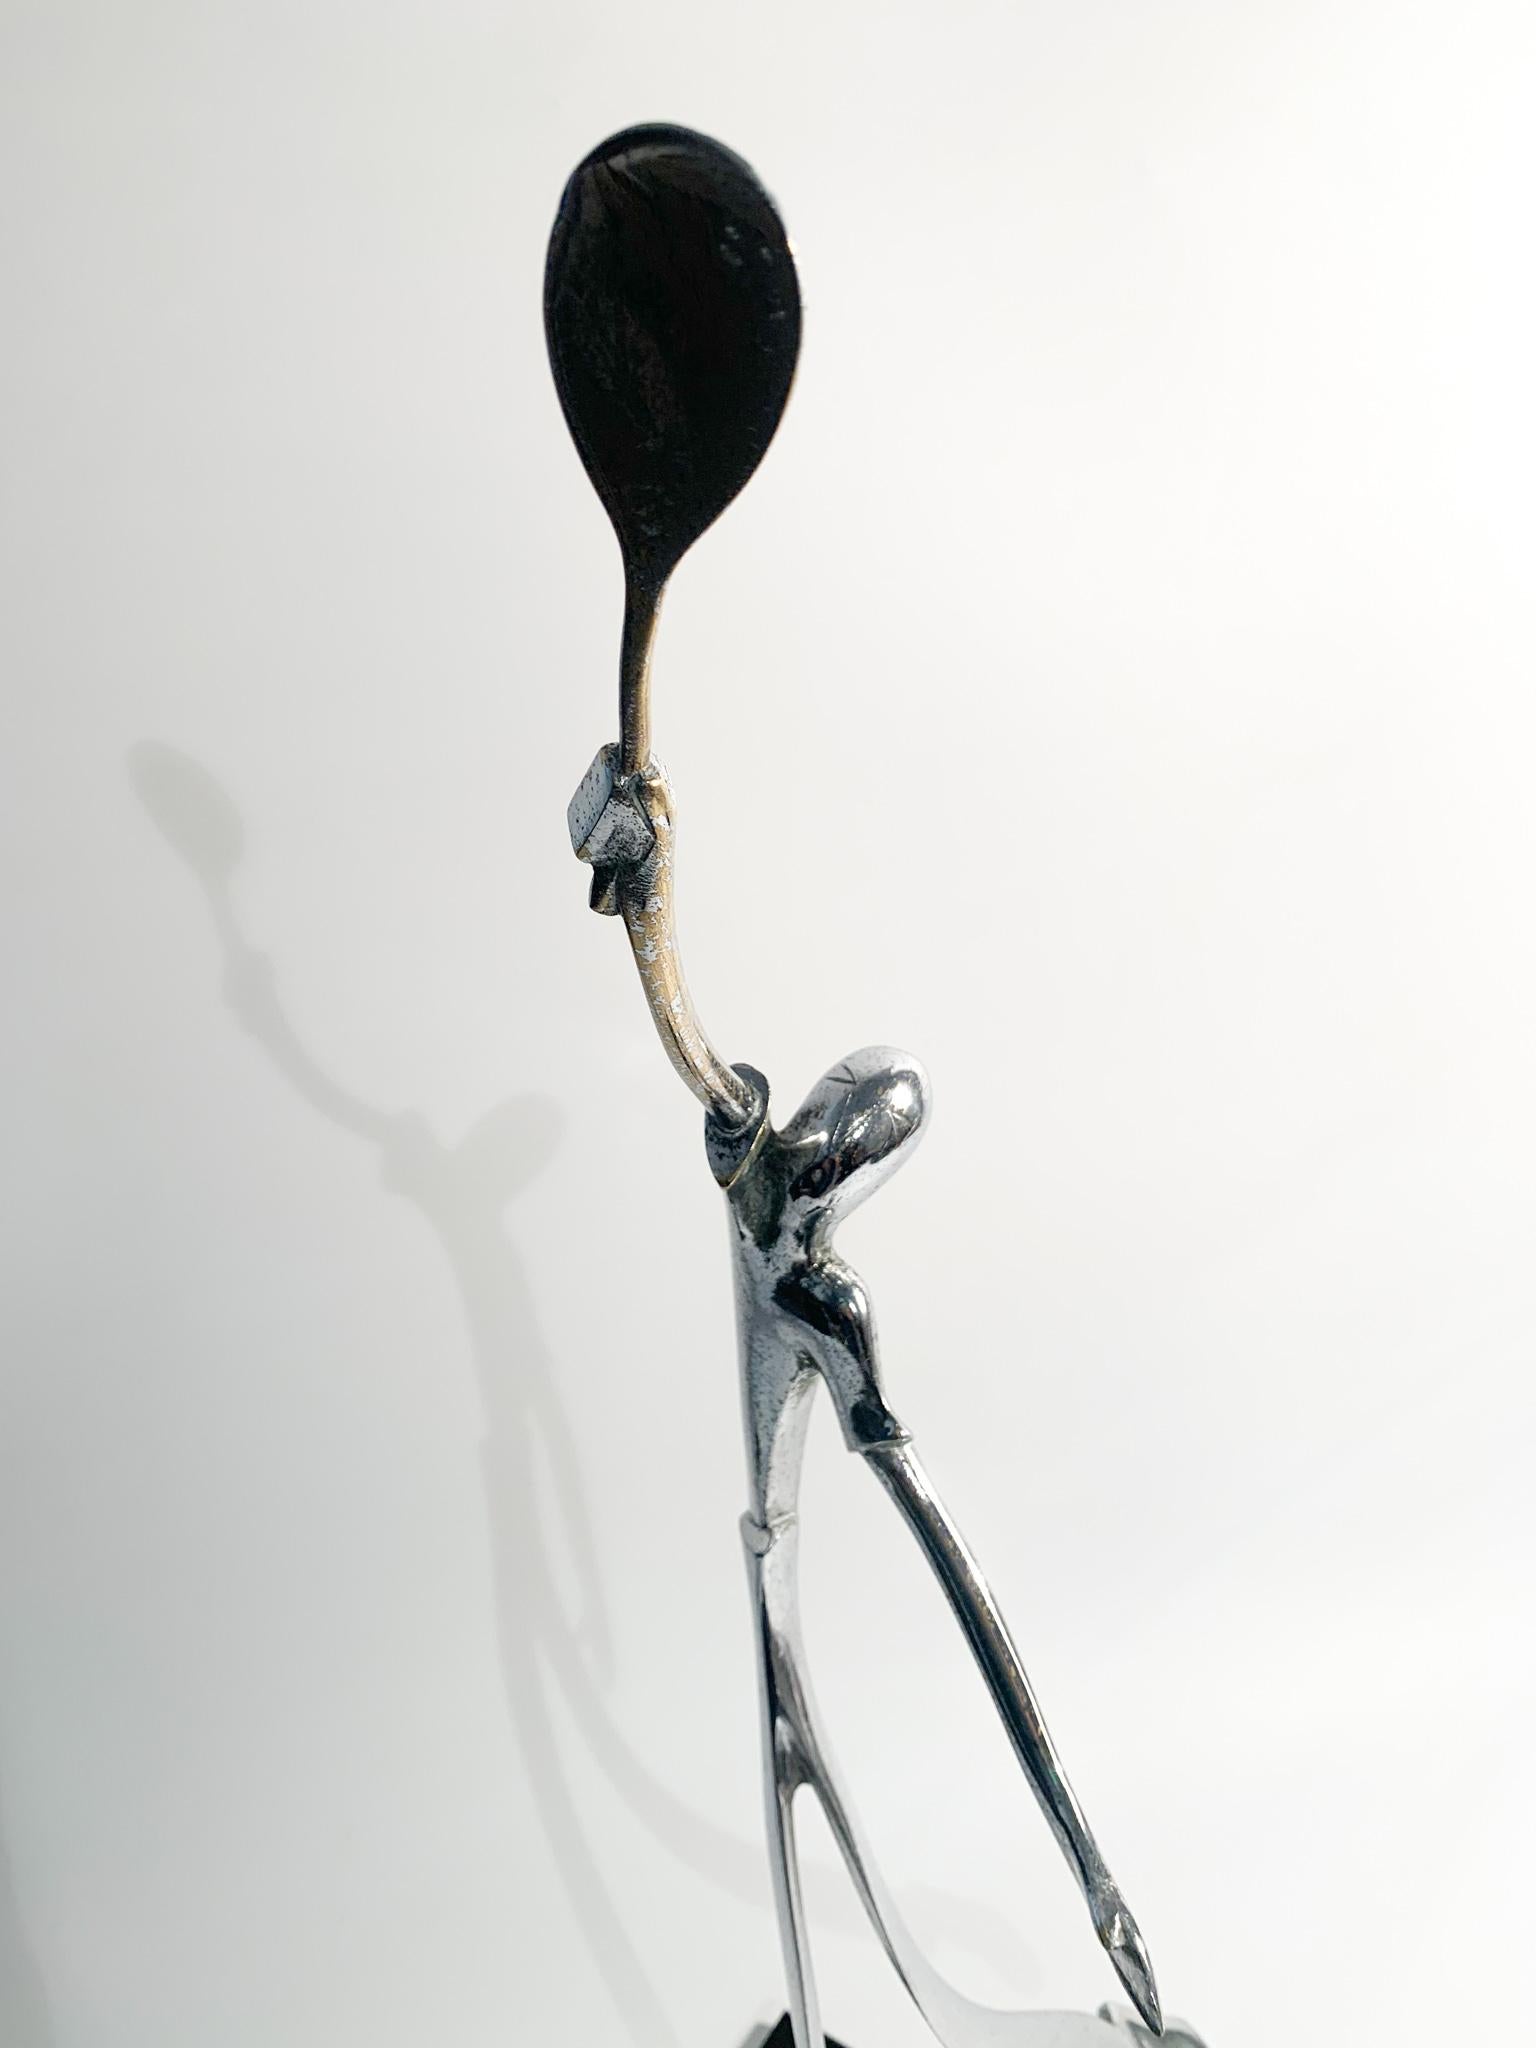 Deco artistic metal sculpture depicting a tennis player, made in the 1930s

Ø 20 cm Ø 12.5 cm h 50 cm